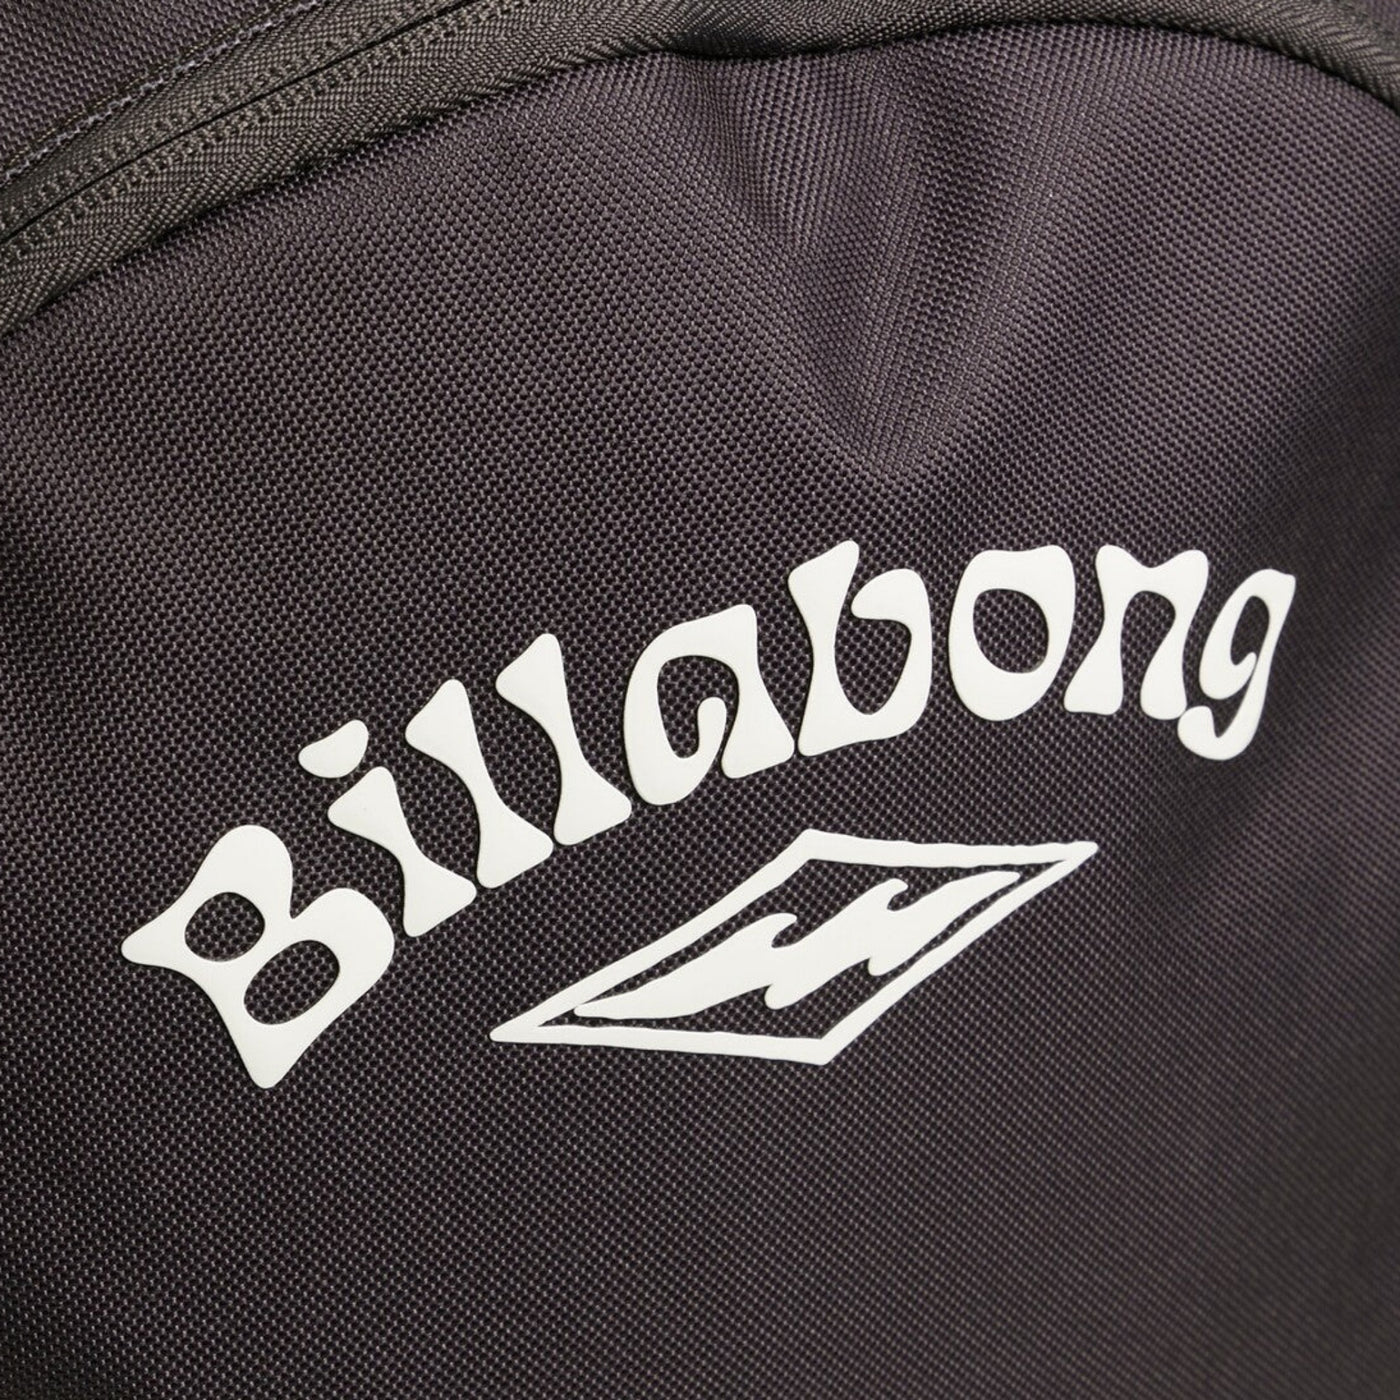 Billabong Paradise Mahi 27L Backpack - Black Sands